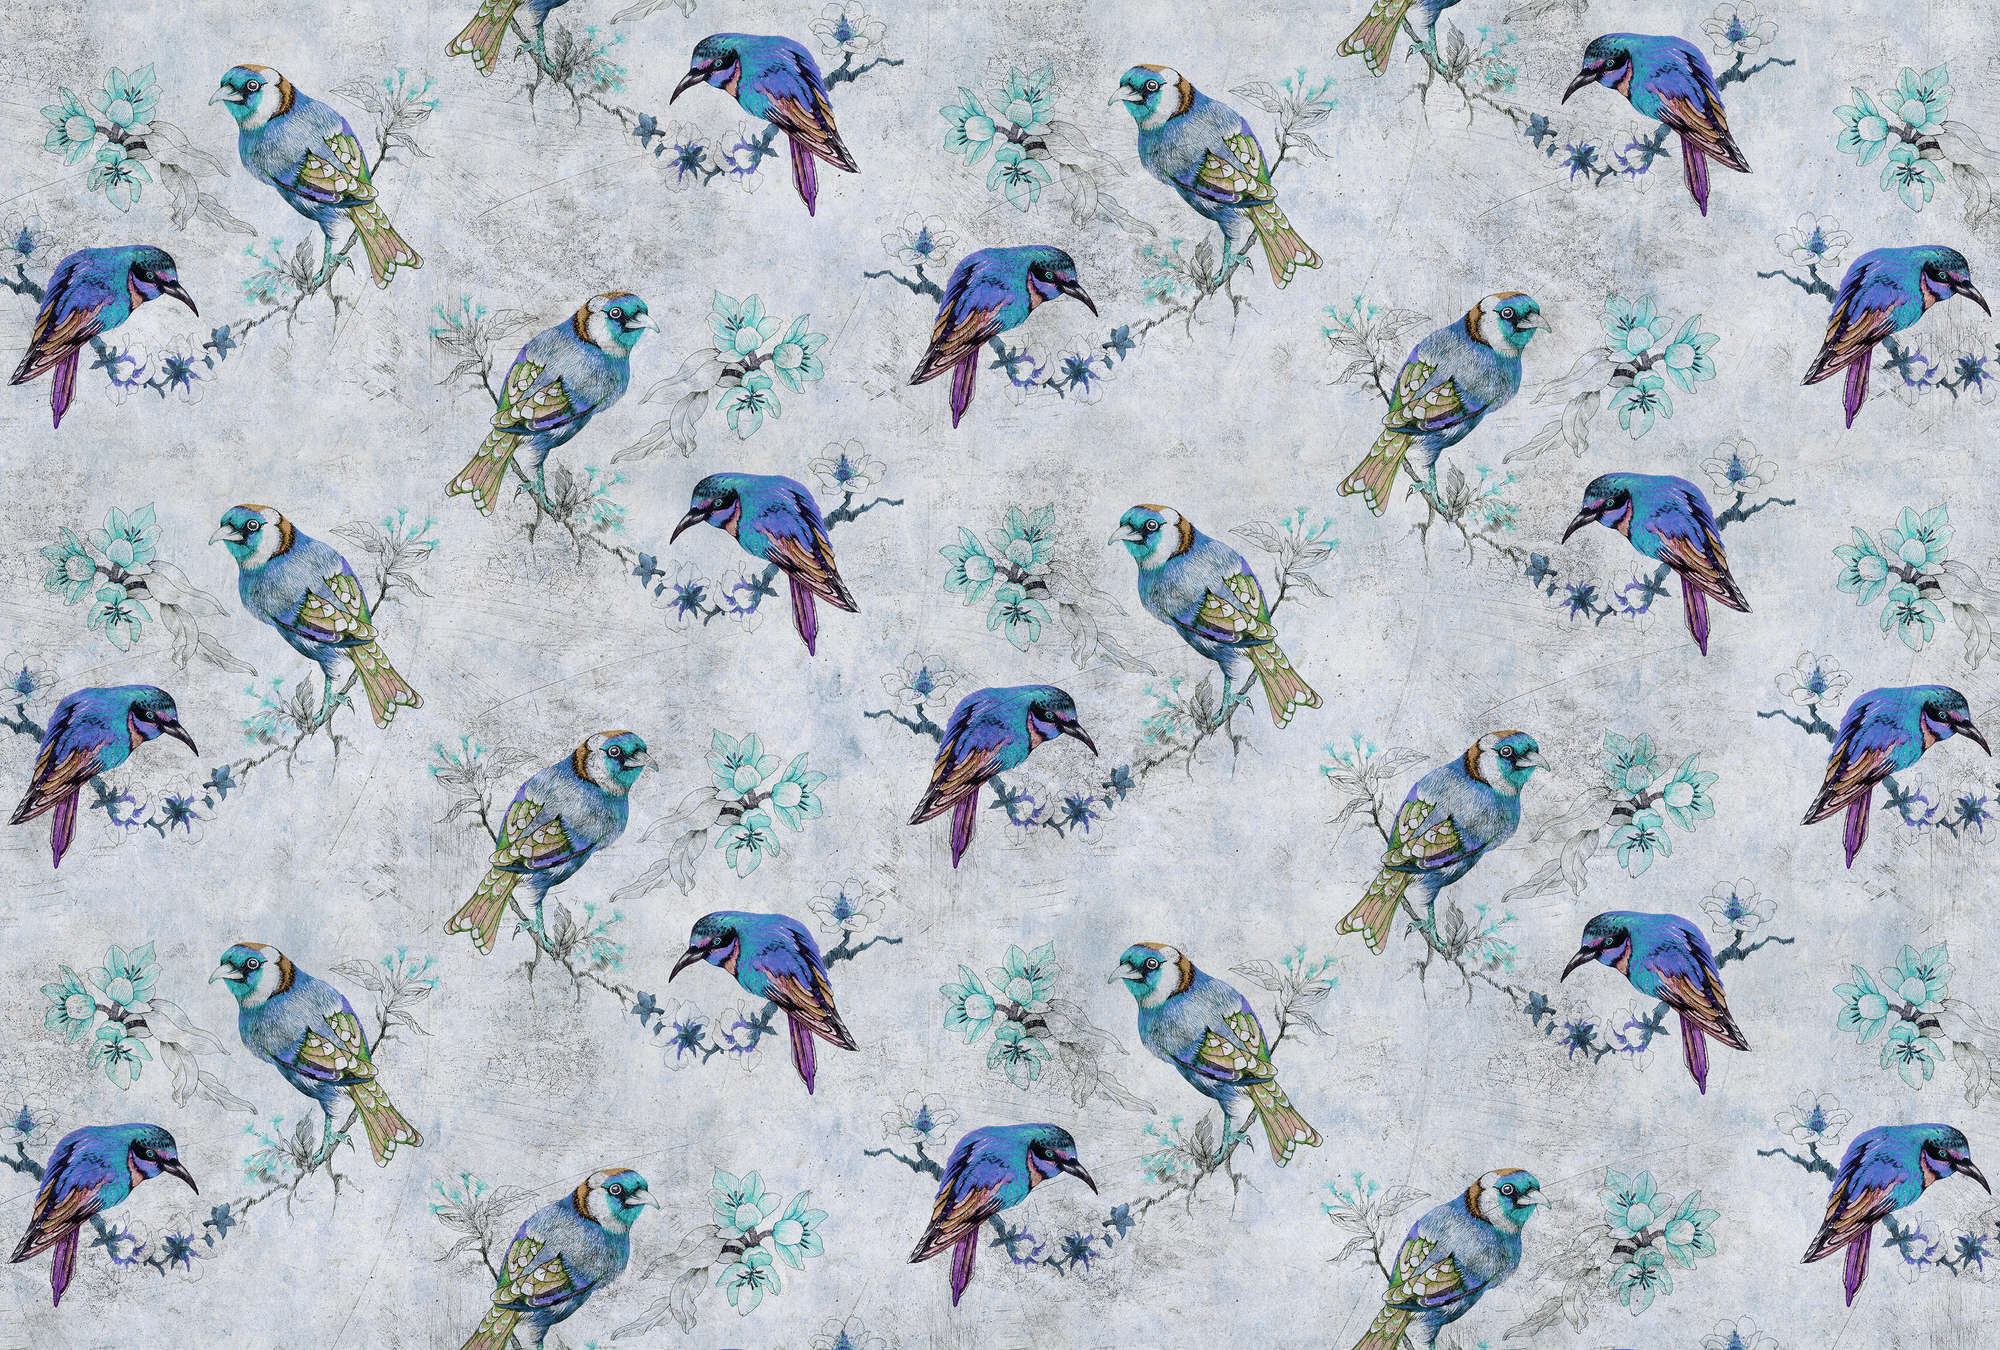             Love birds 1 - Fotomural Dibujo de pájaros en textura rayada - Azul, Gris | Tejido no tejido liso mate
        